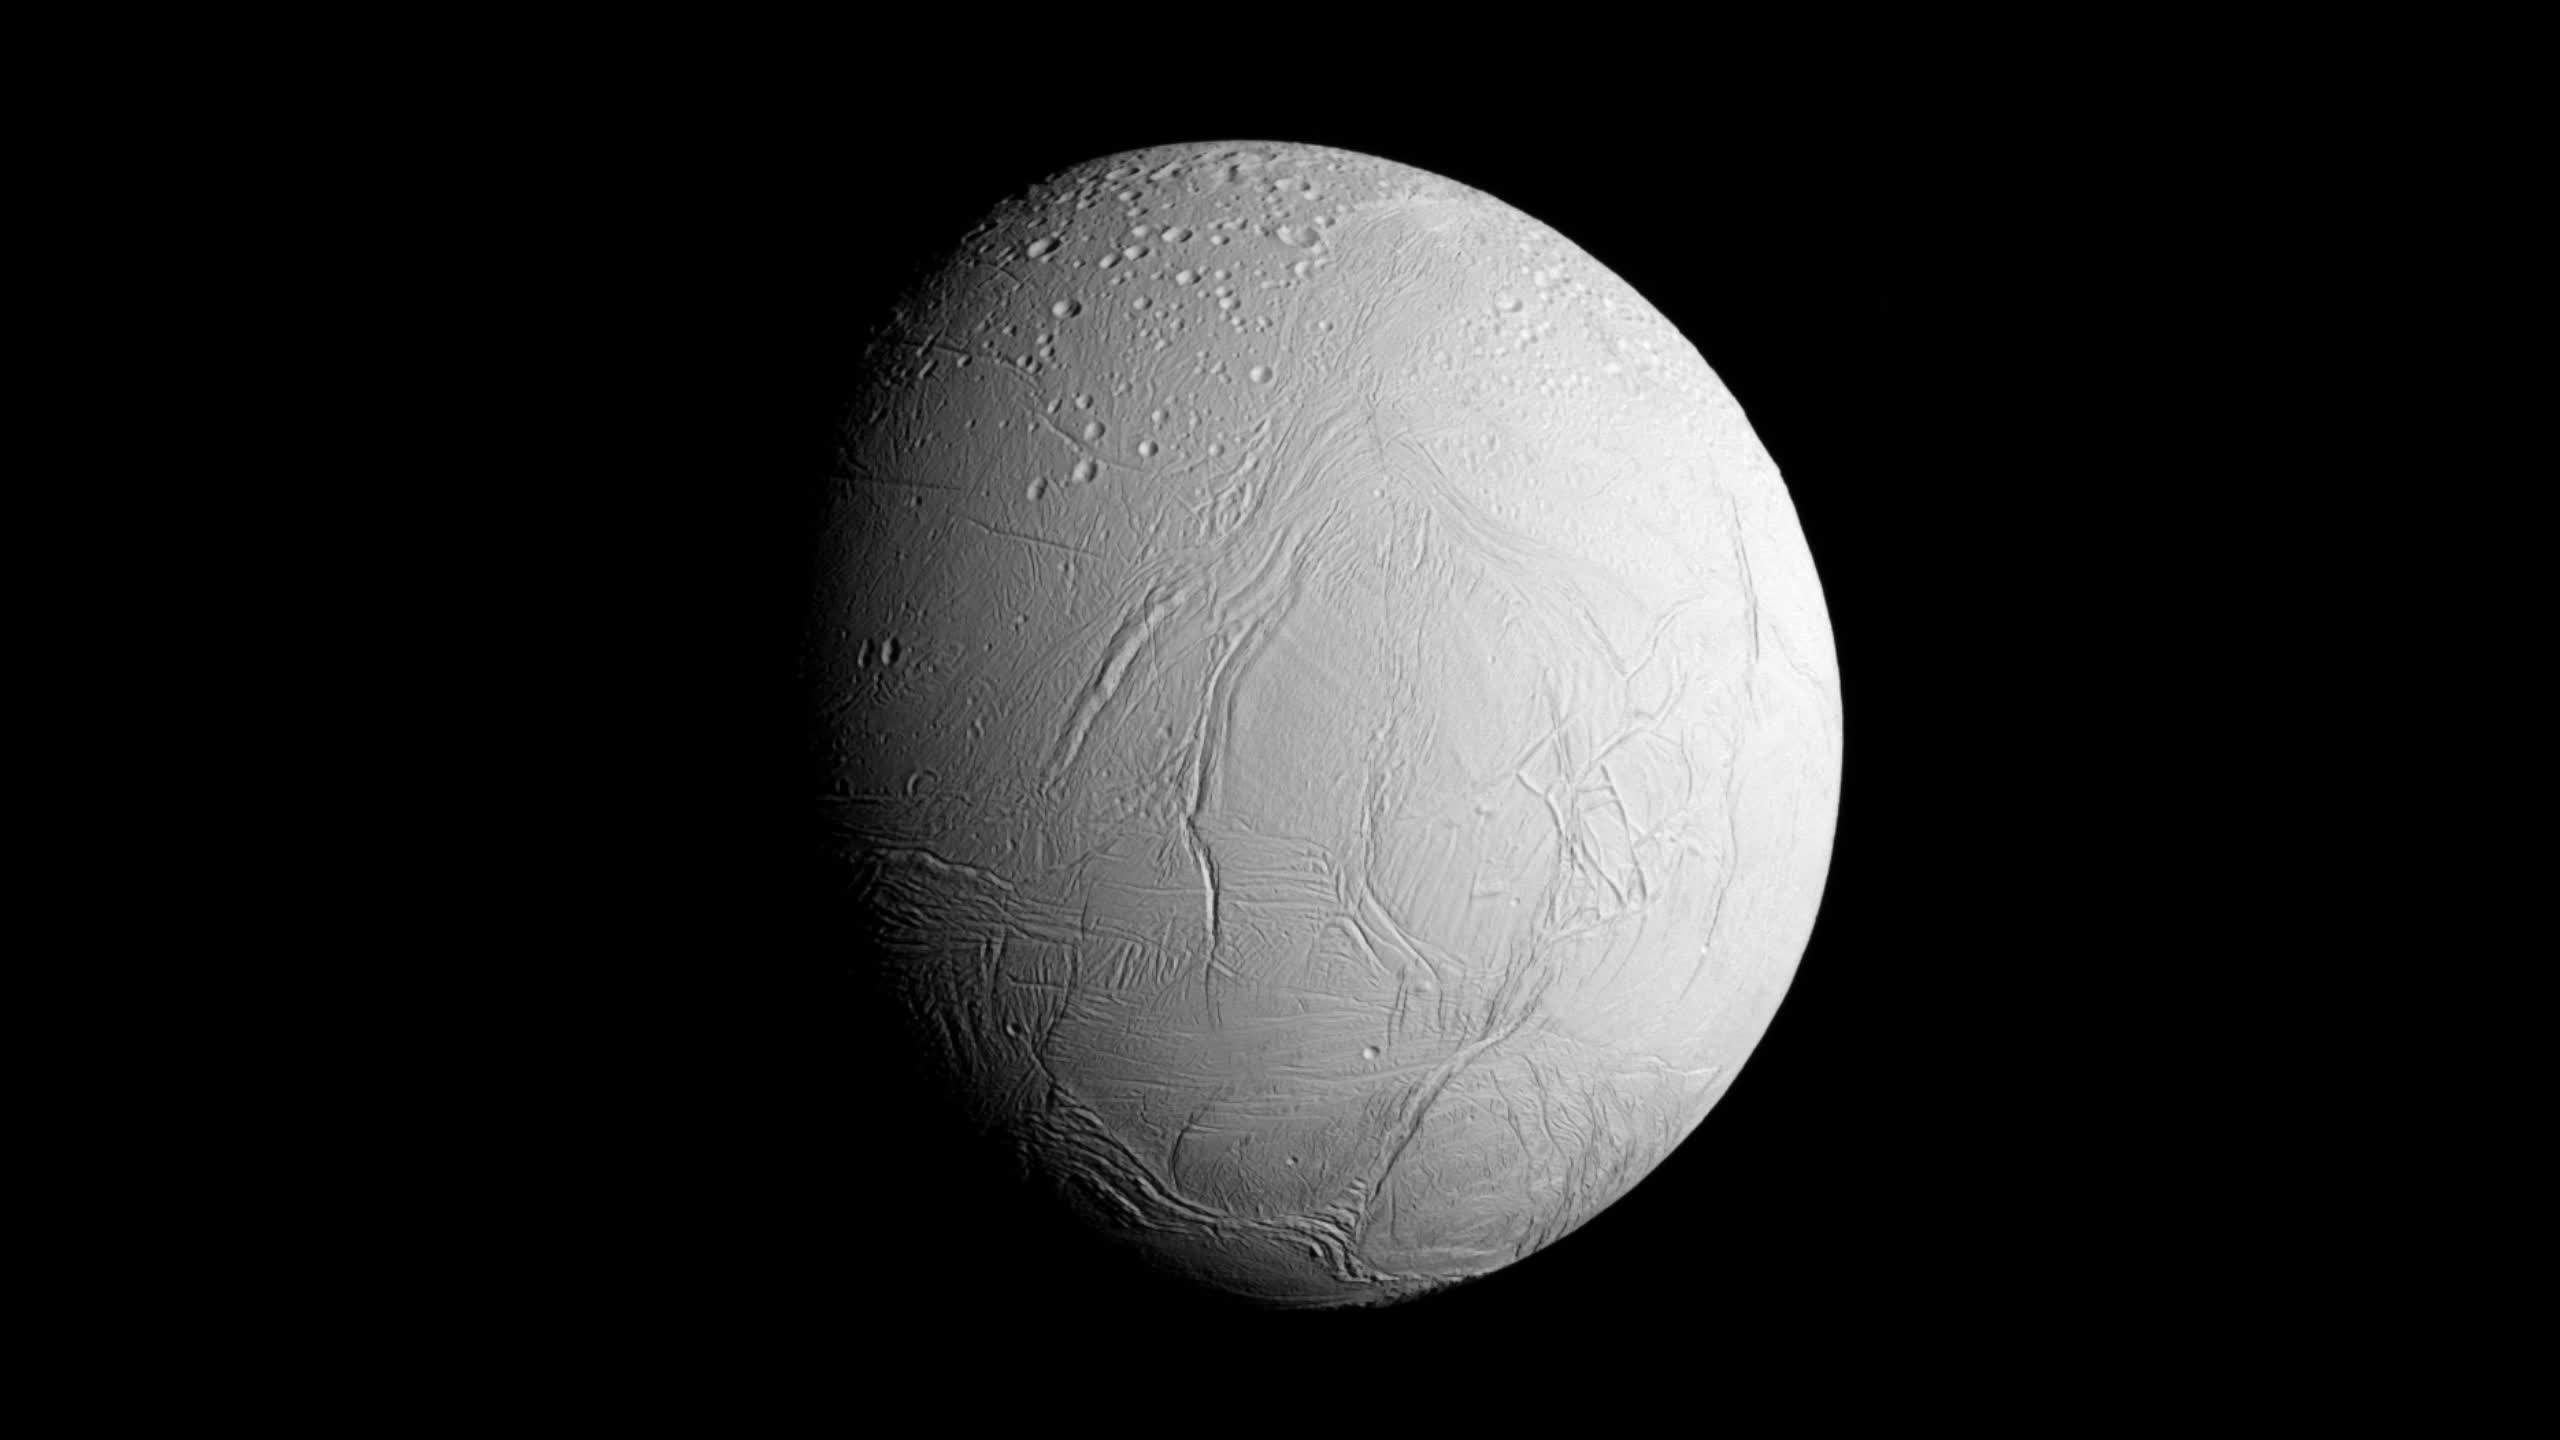 James Webb Telescope detects unprecedented water plume on Saturn moon Enceladus